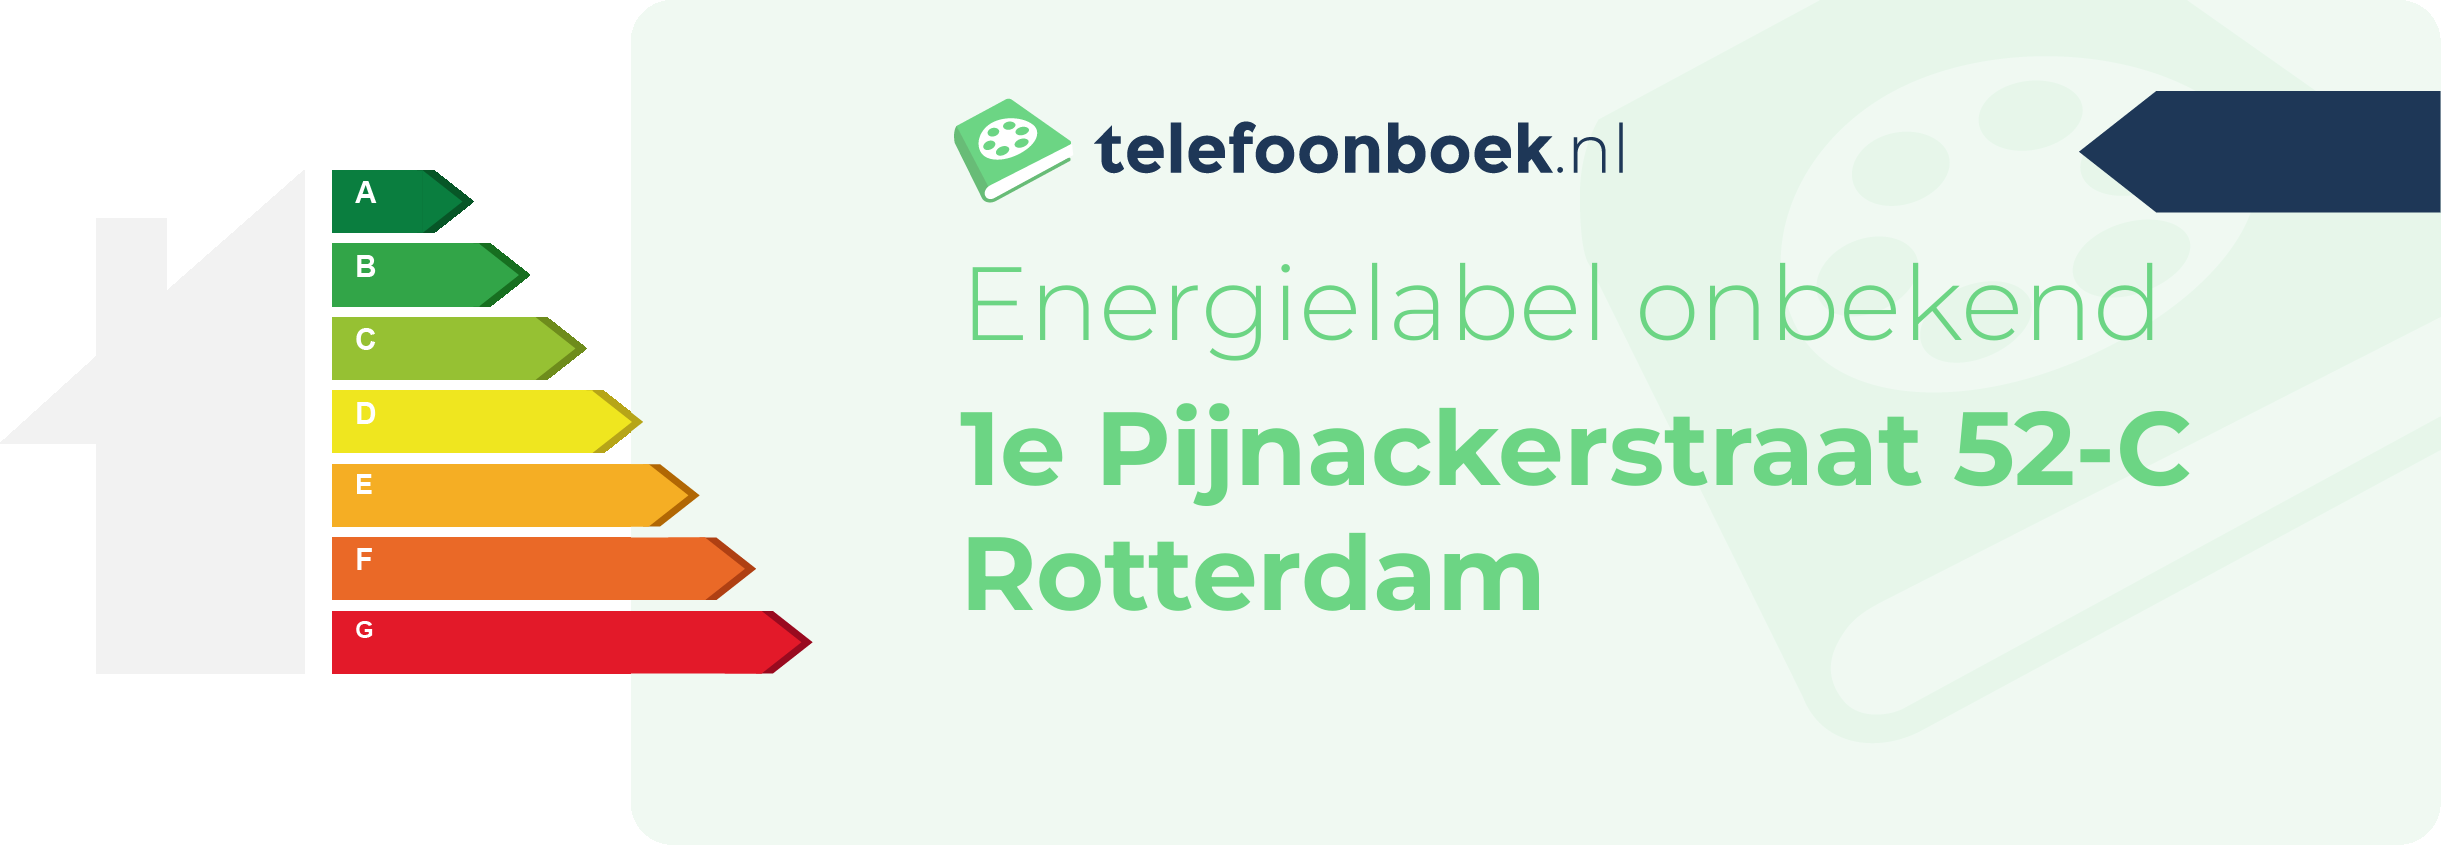 Energielabel 1e Pijnackerstraat 52-C Rotterdam